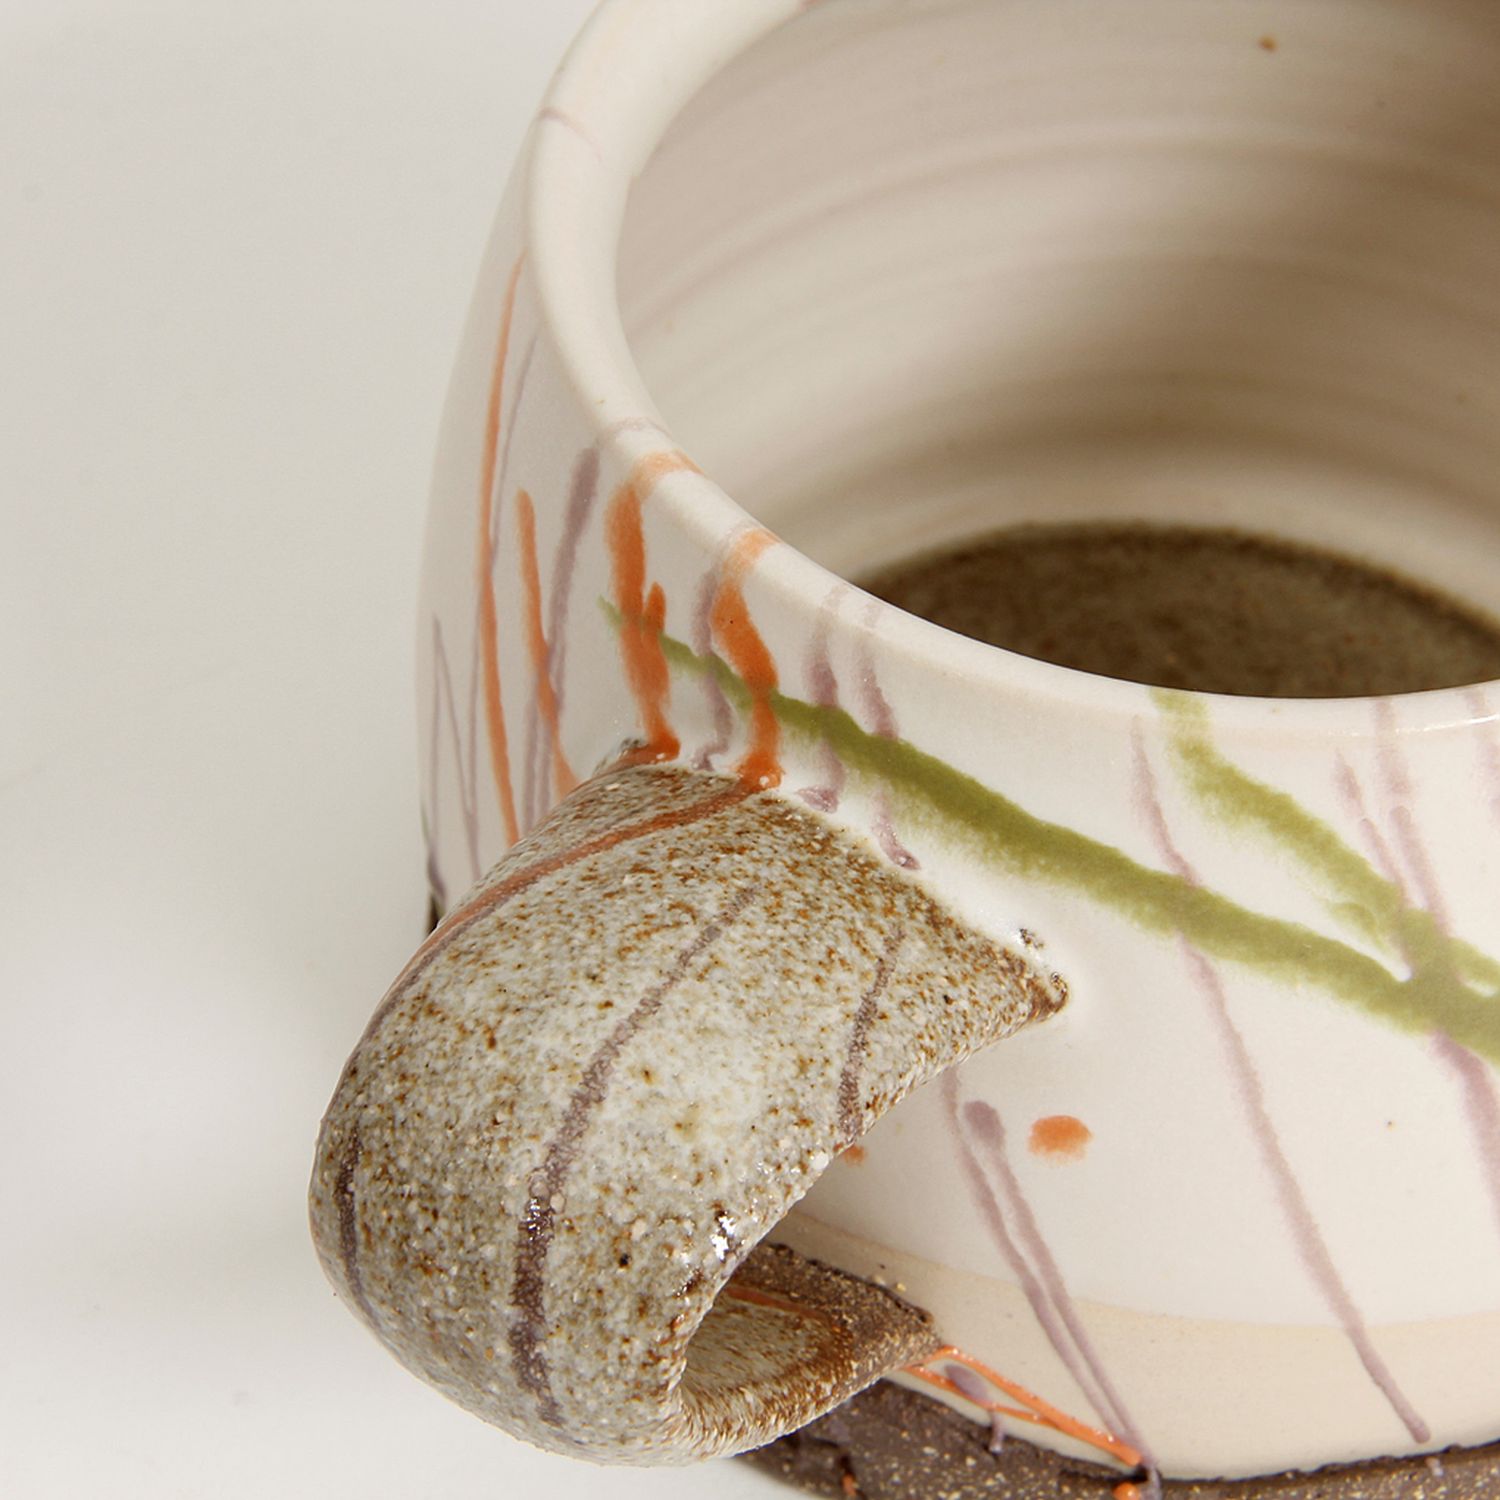 Gracia Isabel Gomez: “Tealicious” White Chocolate Mug with Colours Product Image 6 of 7